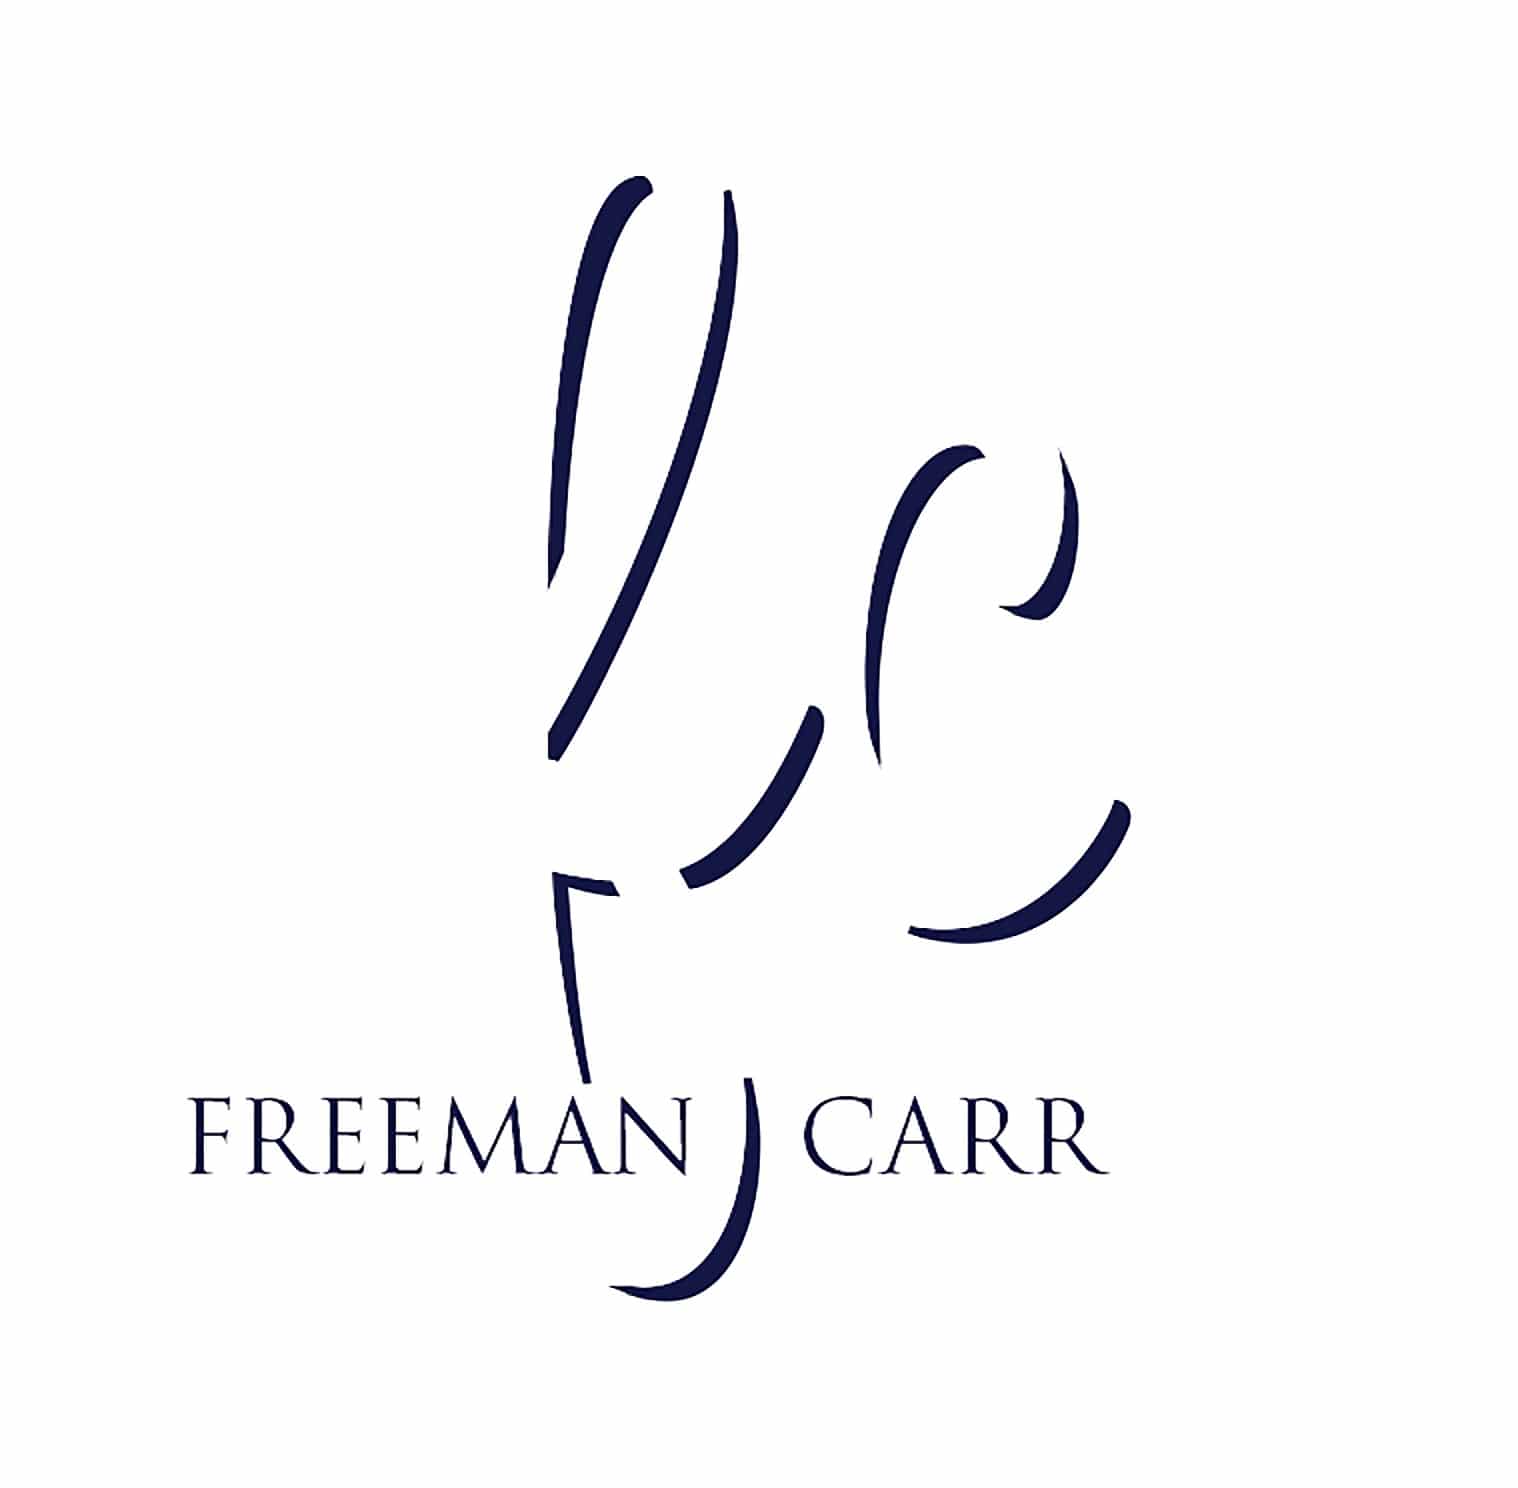 Freeman Carr